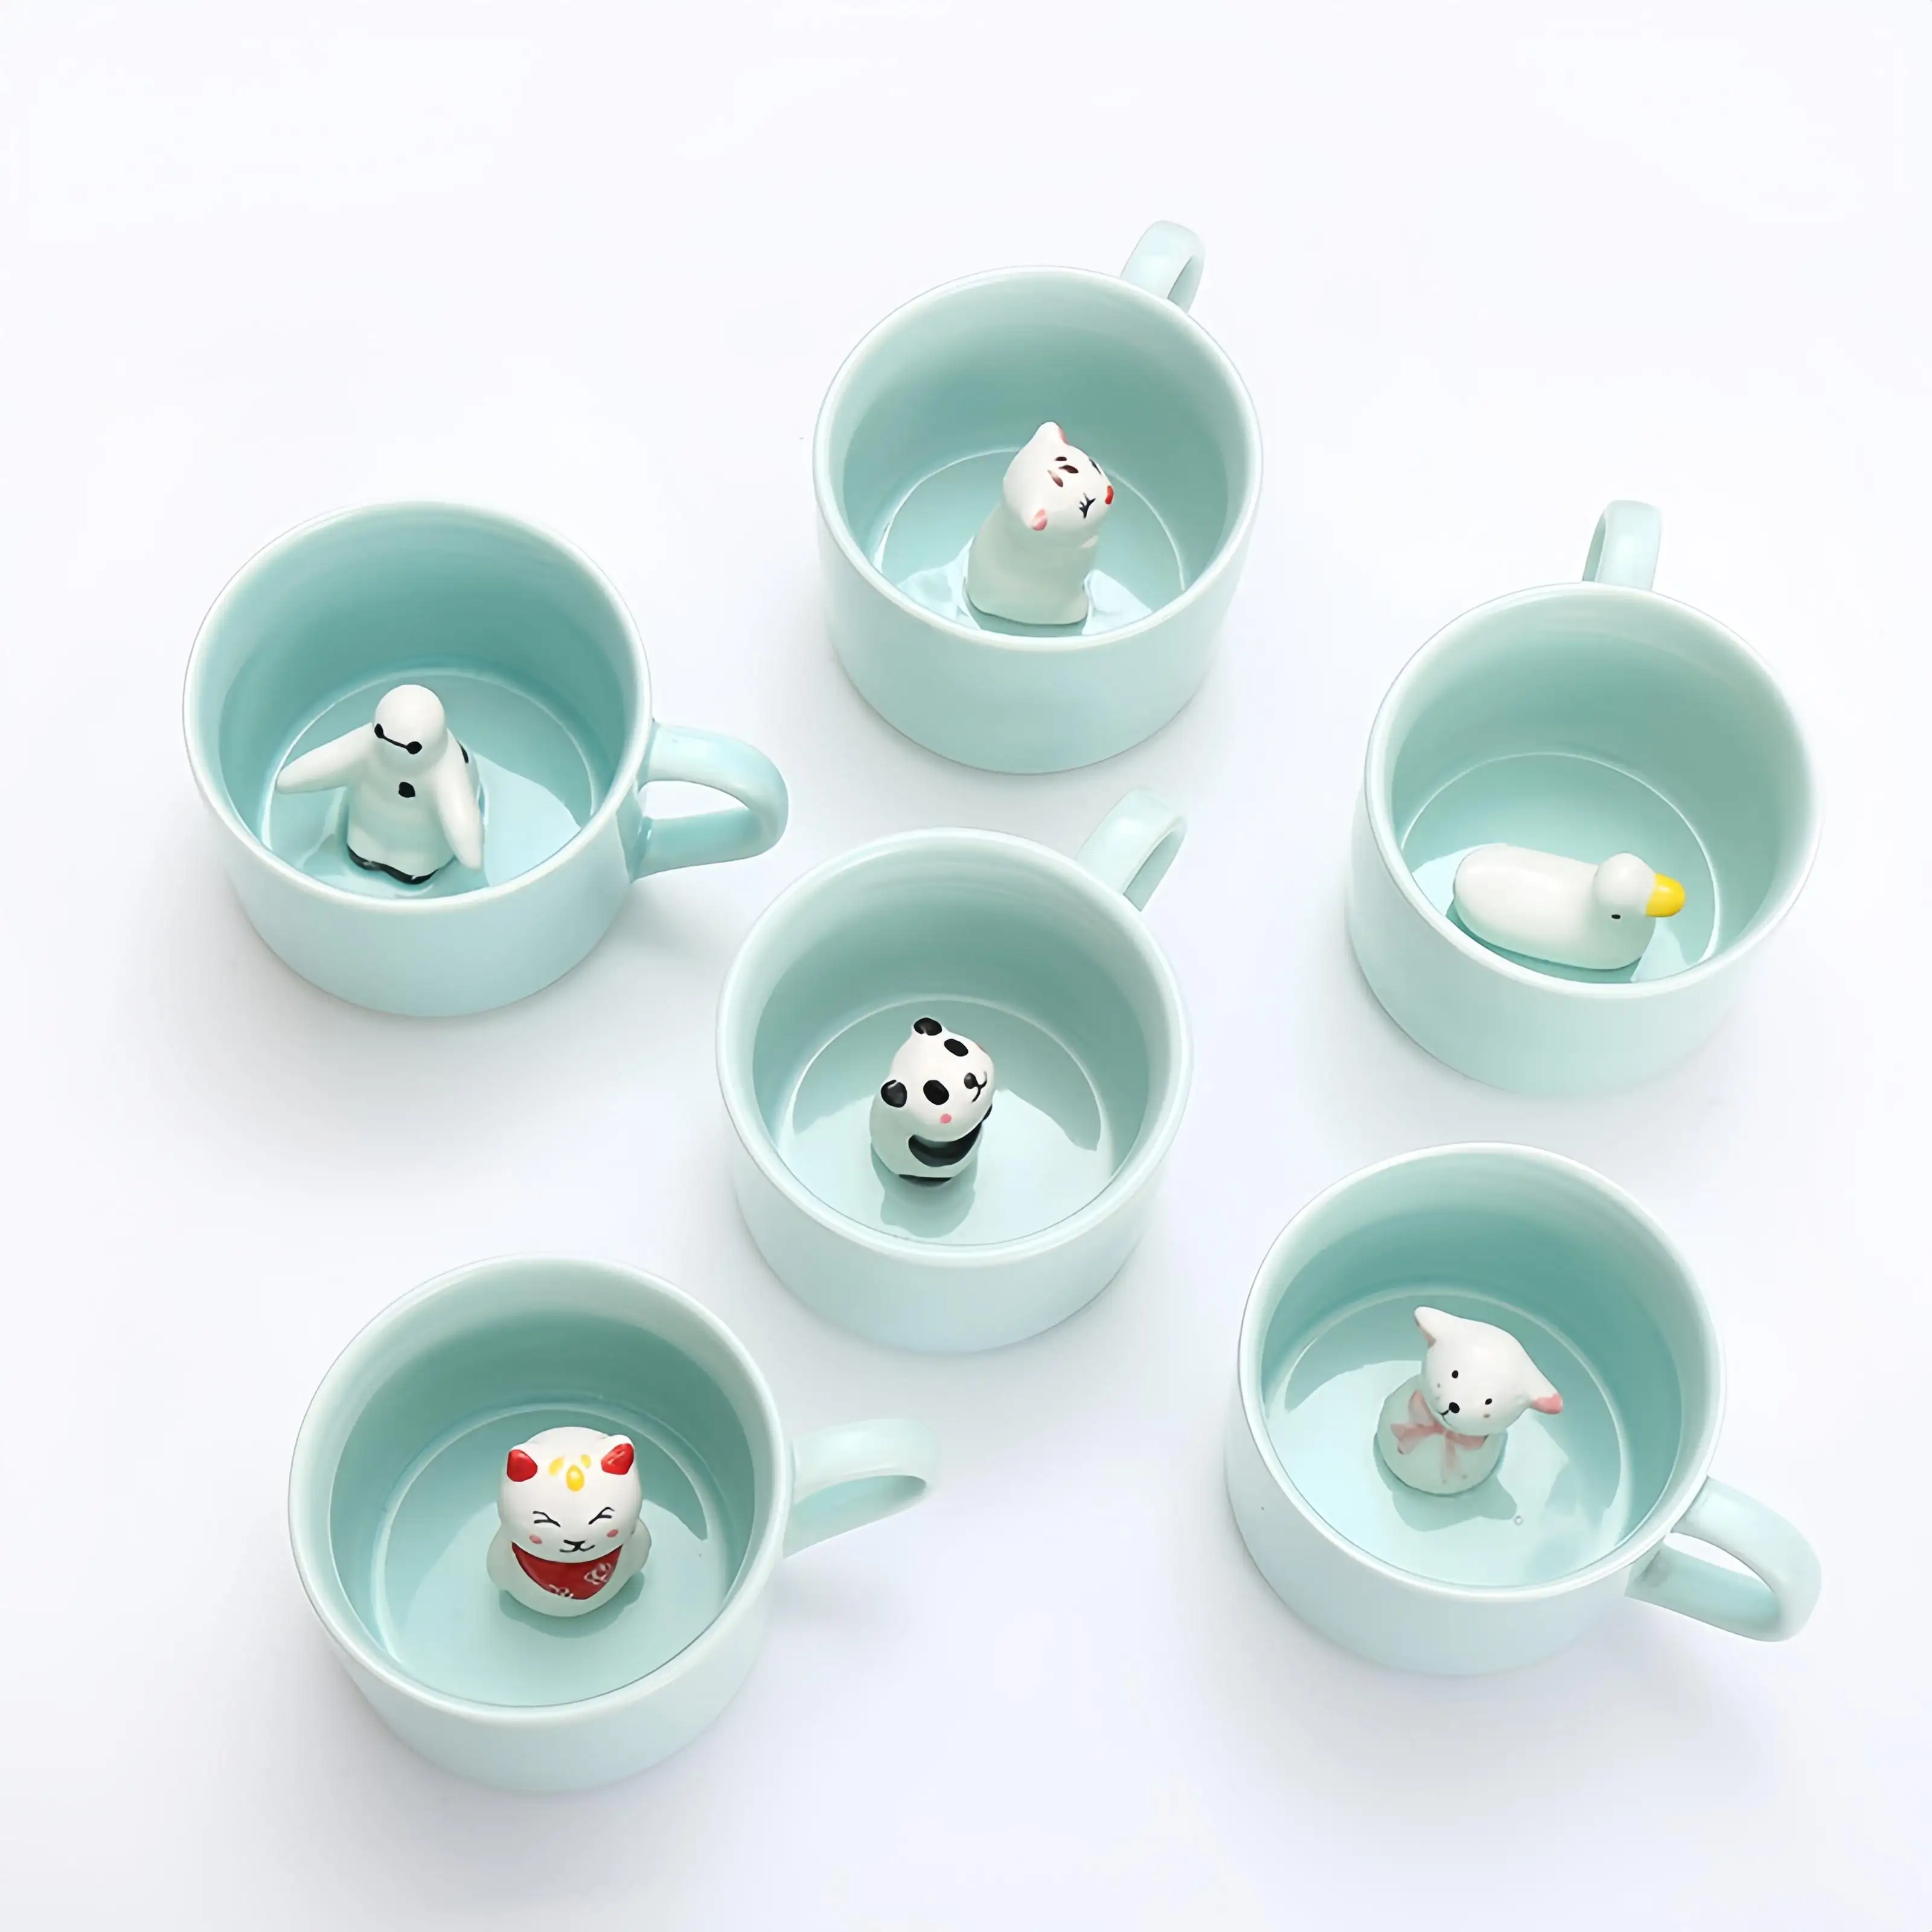 Mug keramik kreatif hewan kartun 3D, Mug Panda Mug patung buatan tangan lucu untuk anak-anak kejutan ulang tahun Natal